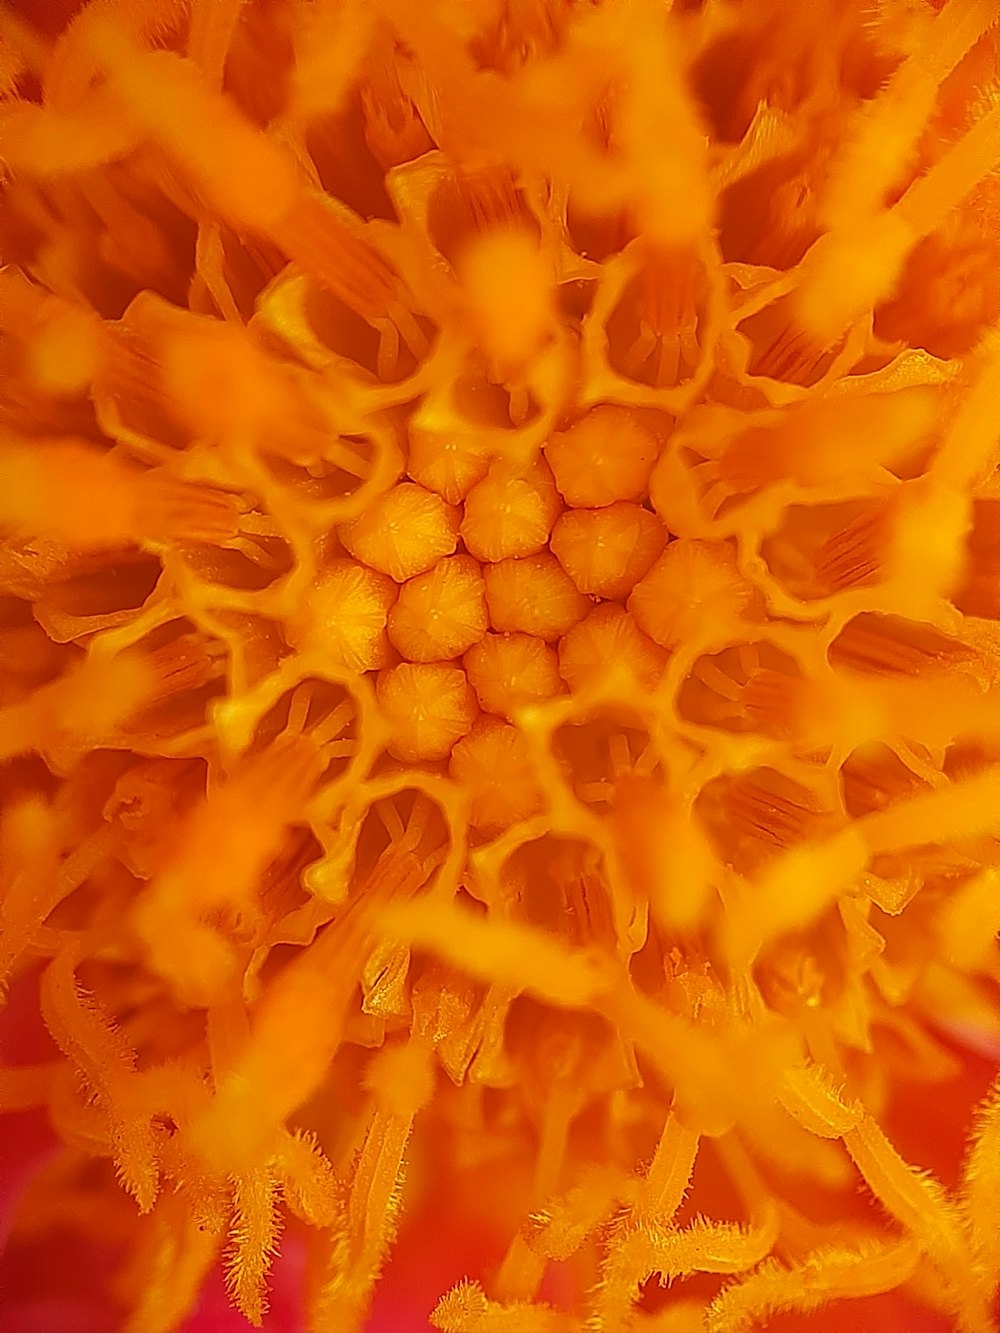 yellow flower in macro lens